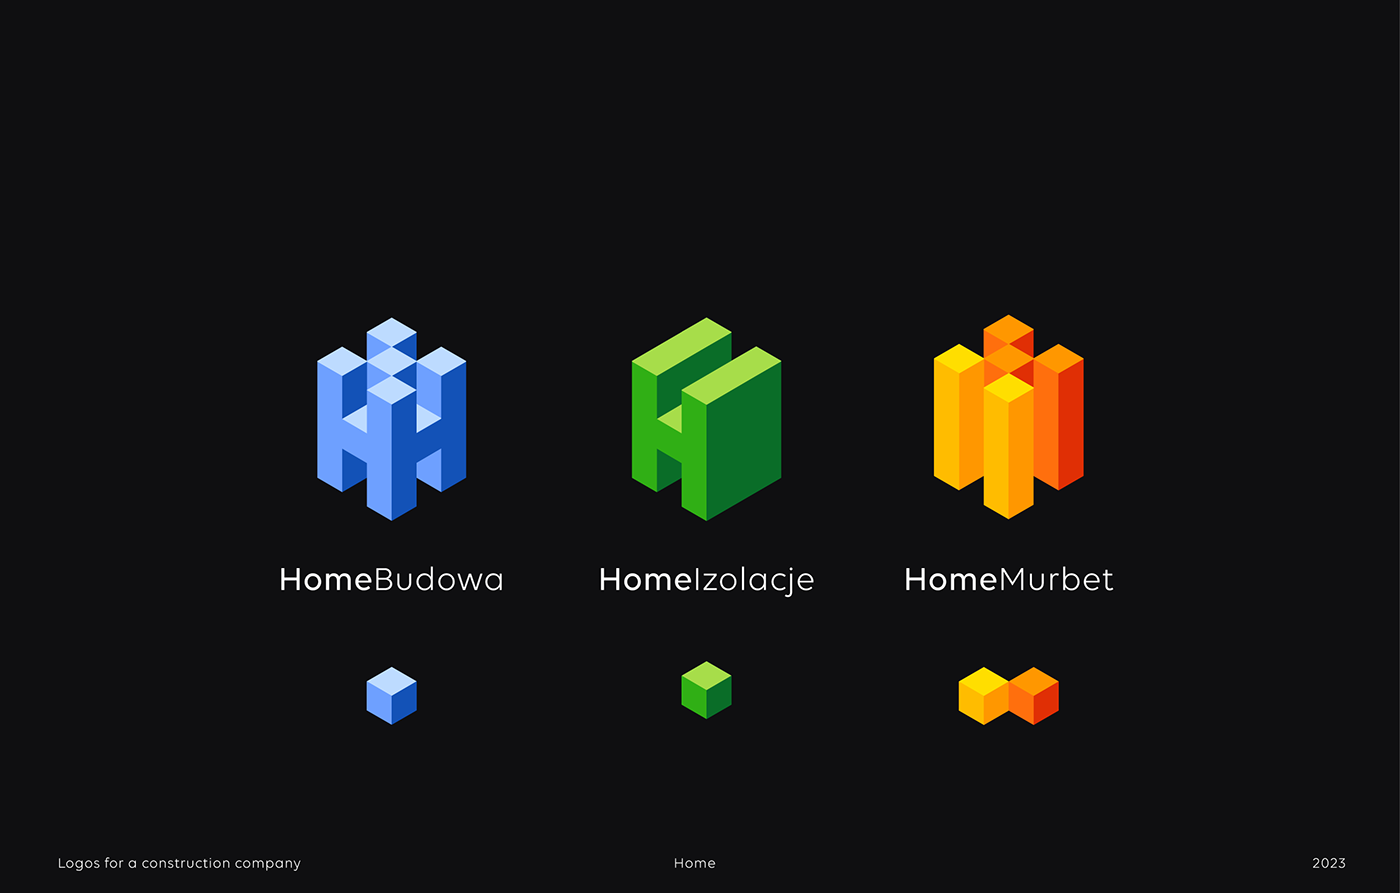 Home Budowa logo project. Valeria Agafonova